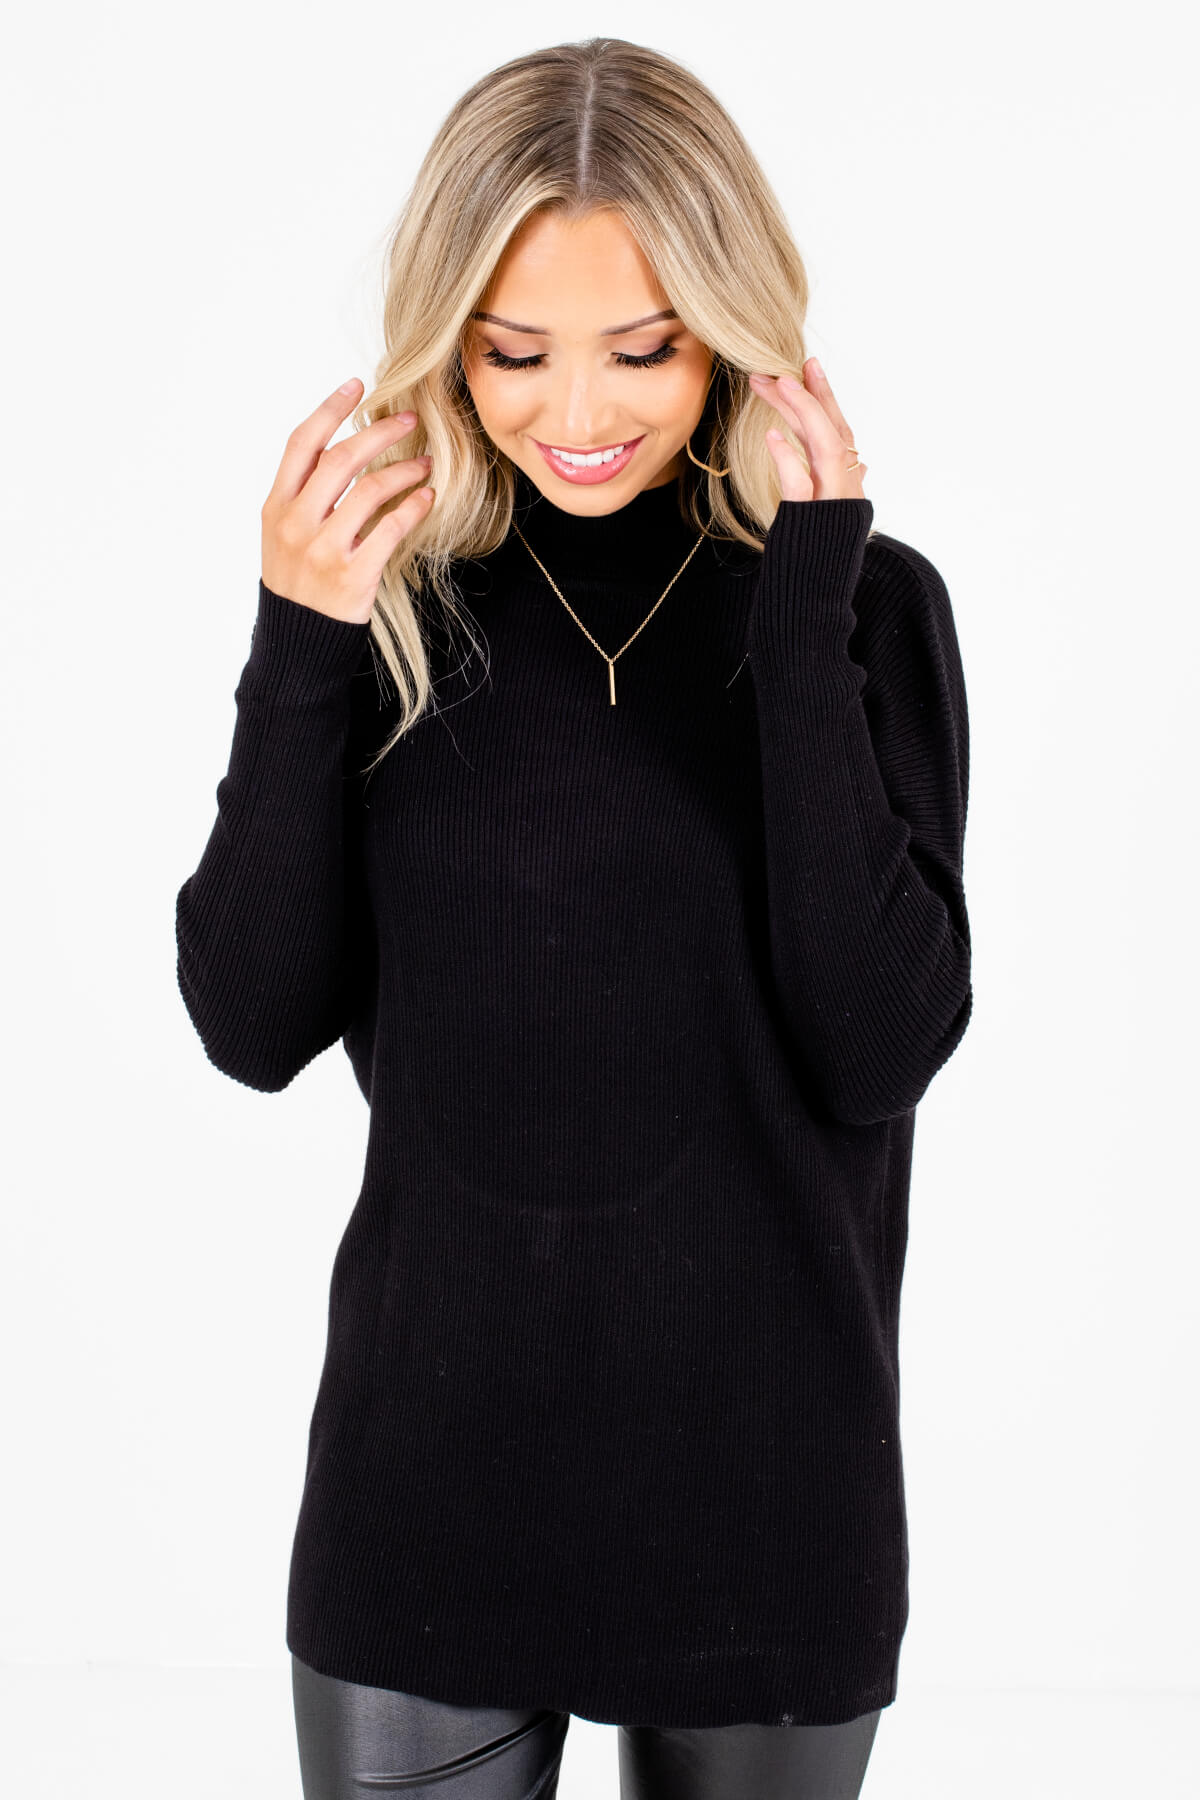 Women’s Black Long Sleeve Boutique Sweater